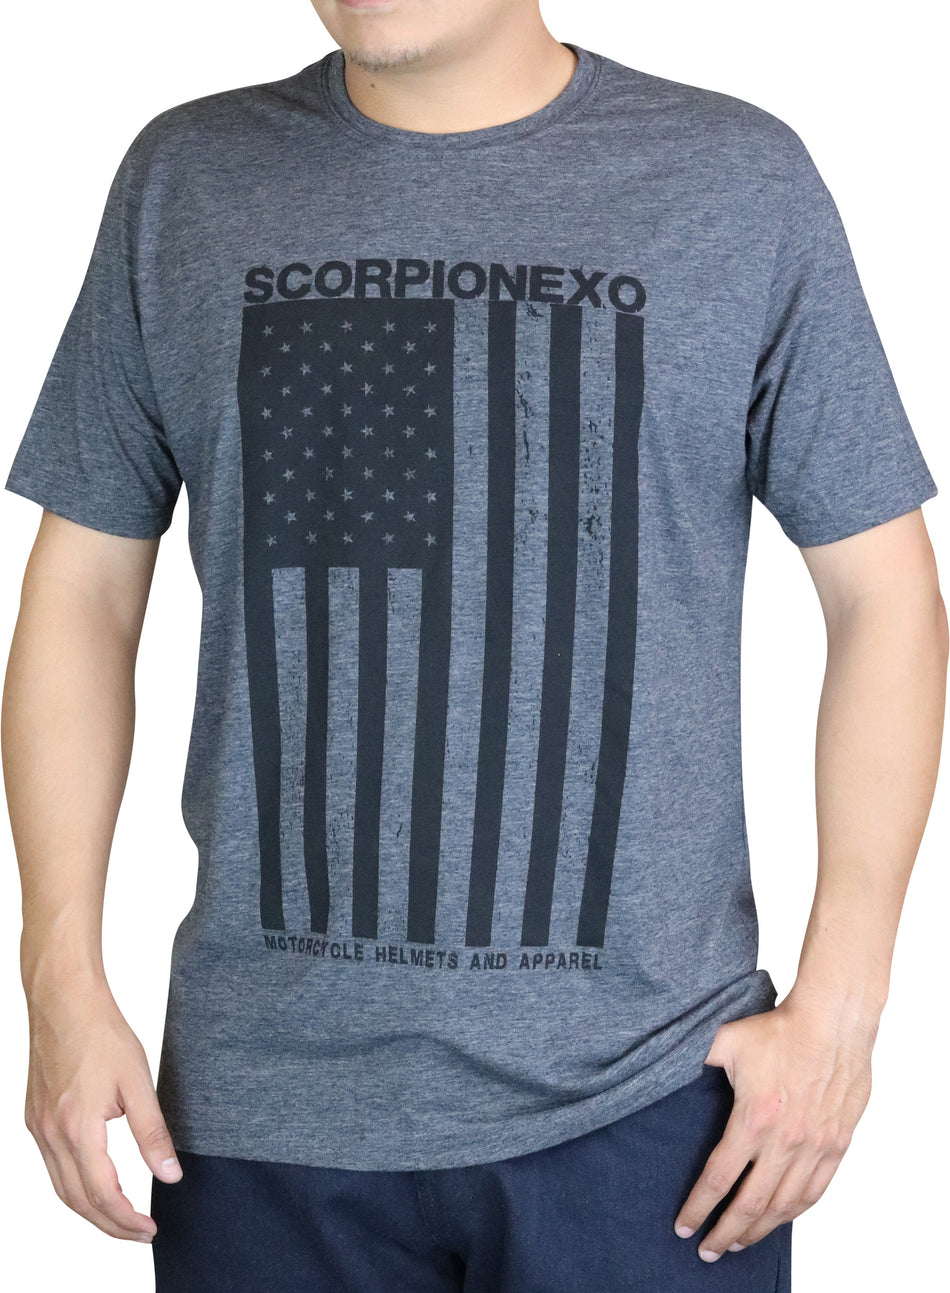 SCORPION EXO Americana Shirt Black/Charcoal 2x 61-750-07